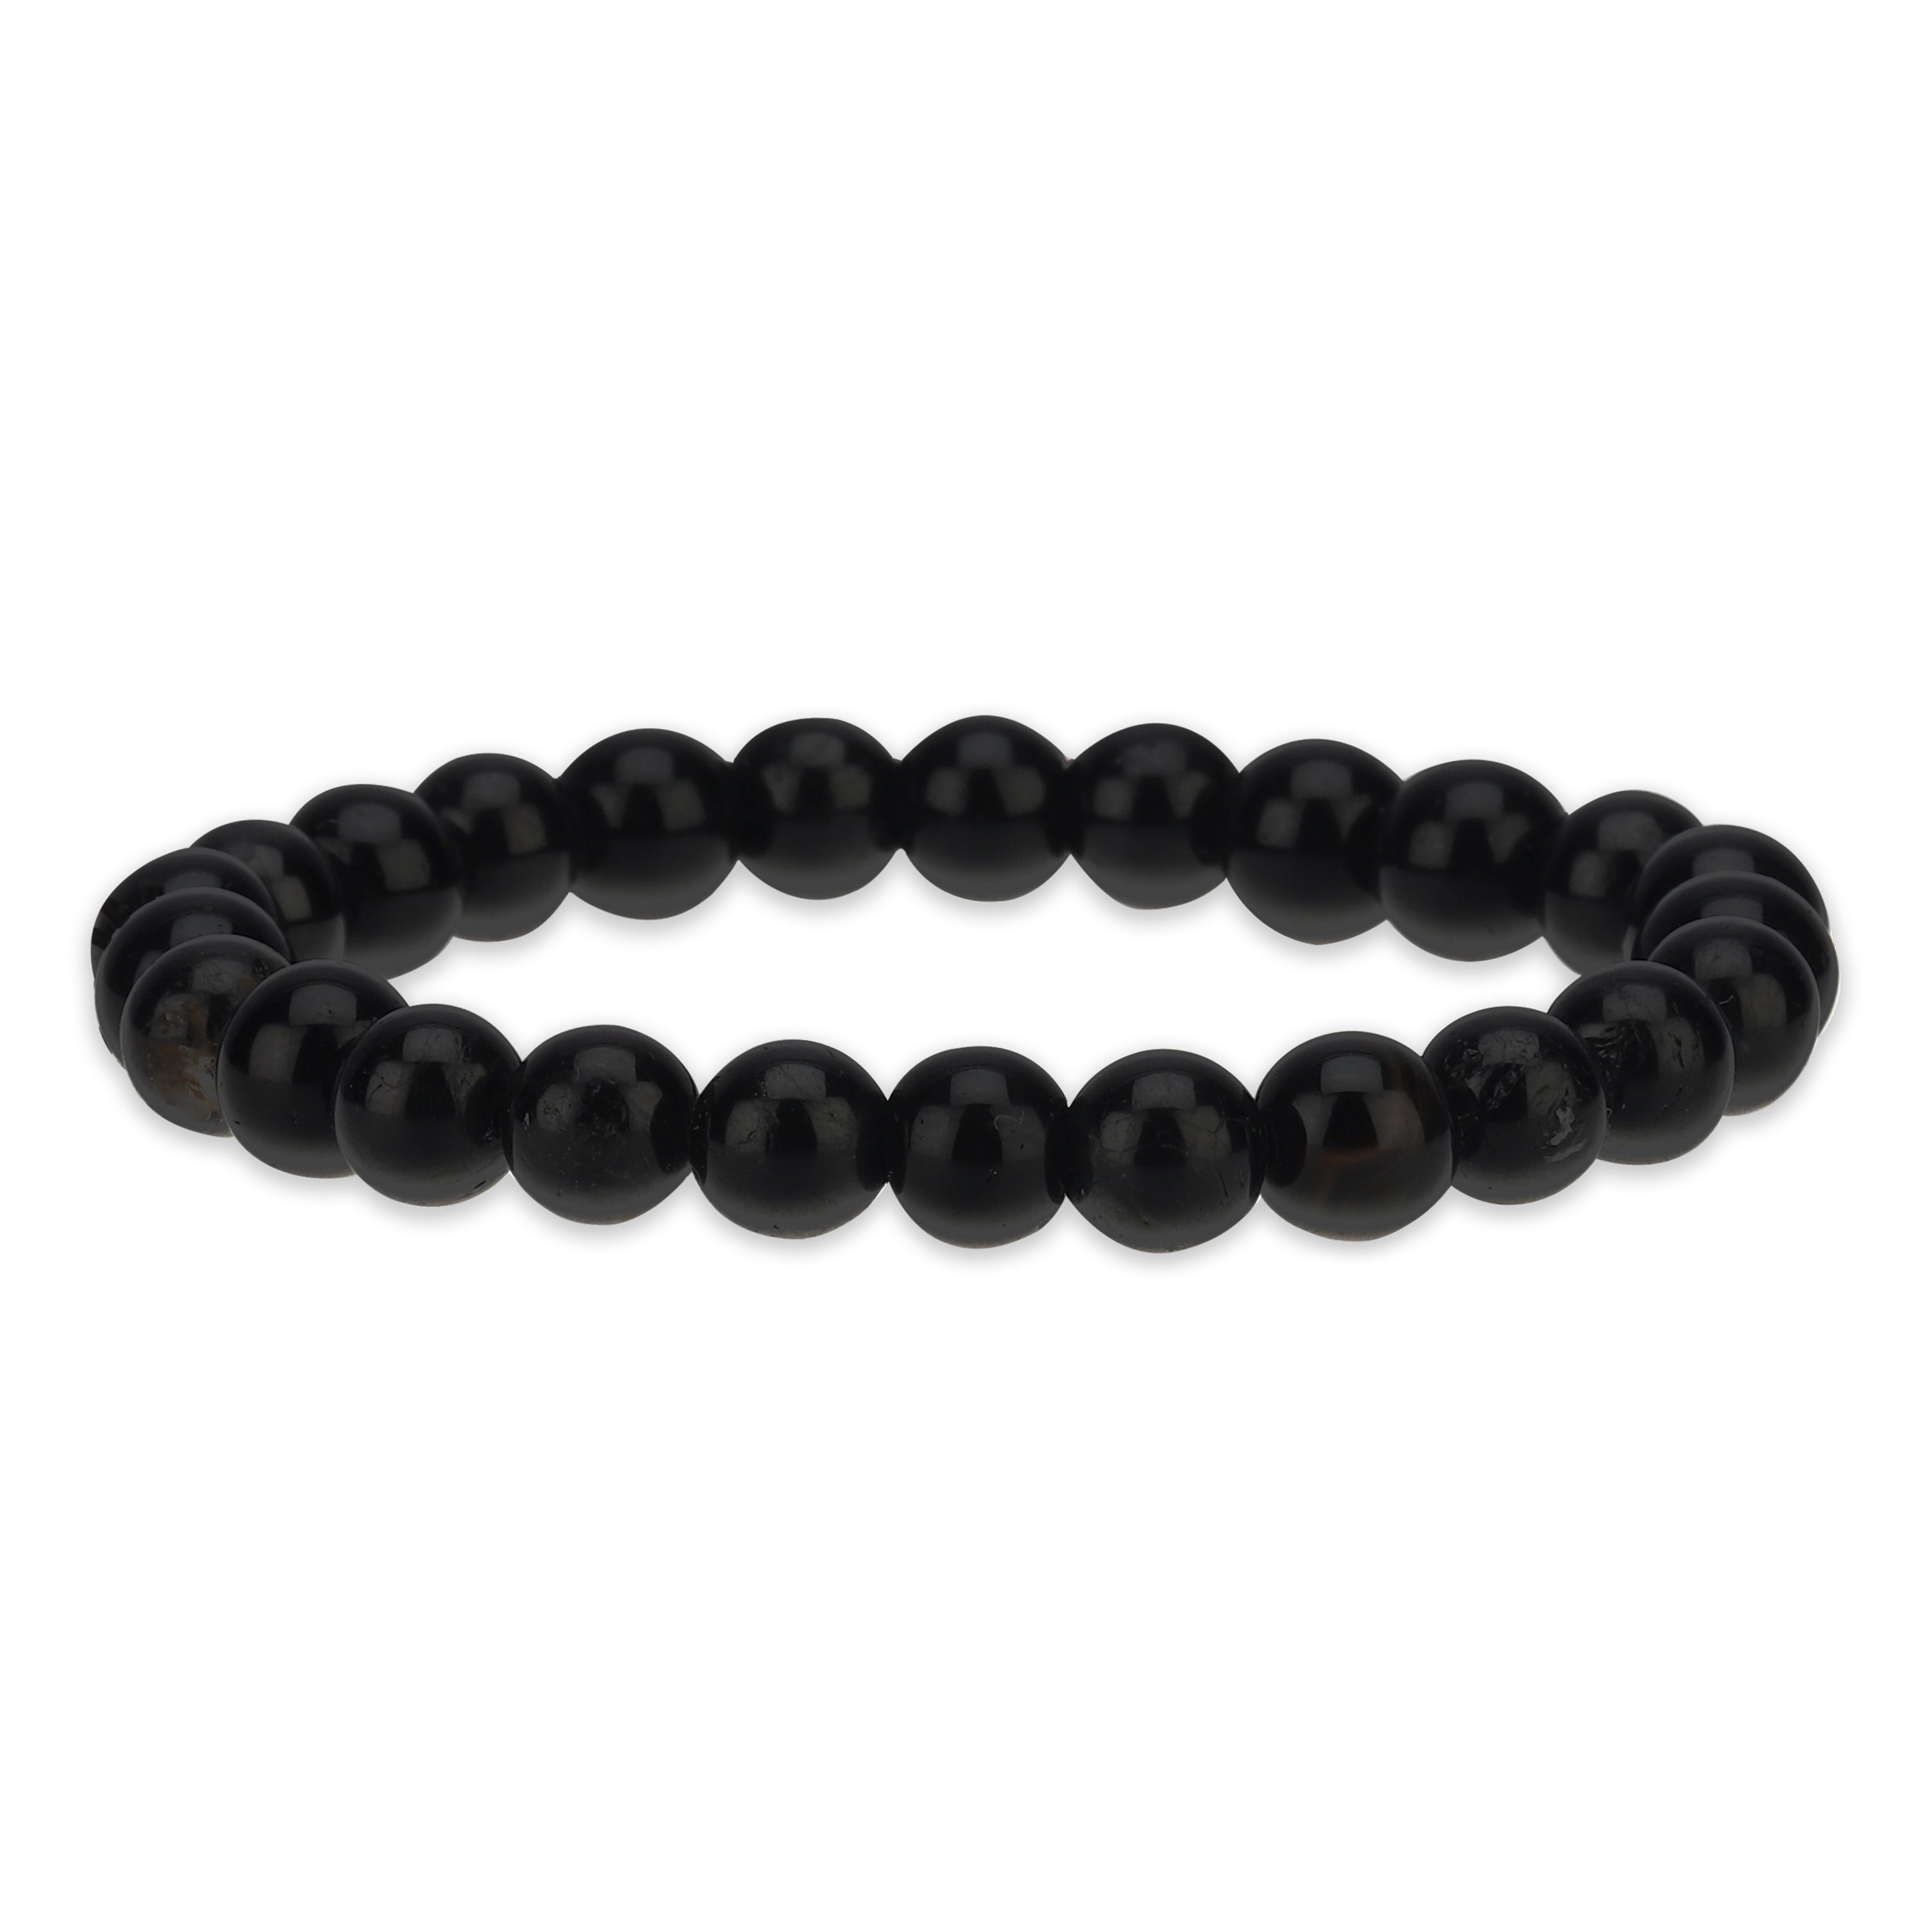 Obsidian (Black) Bracelet